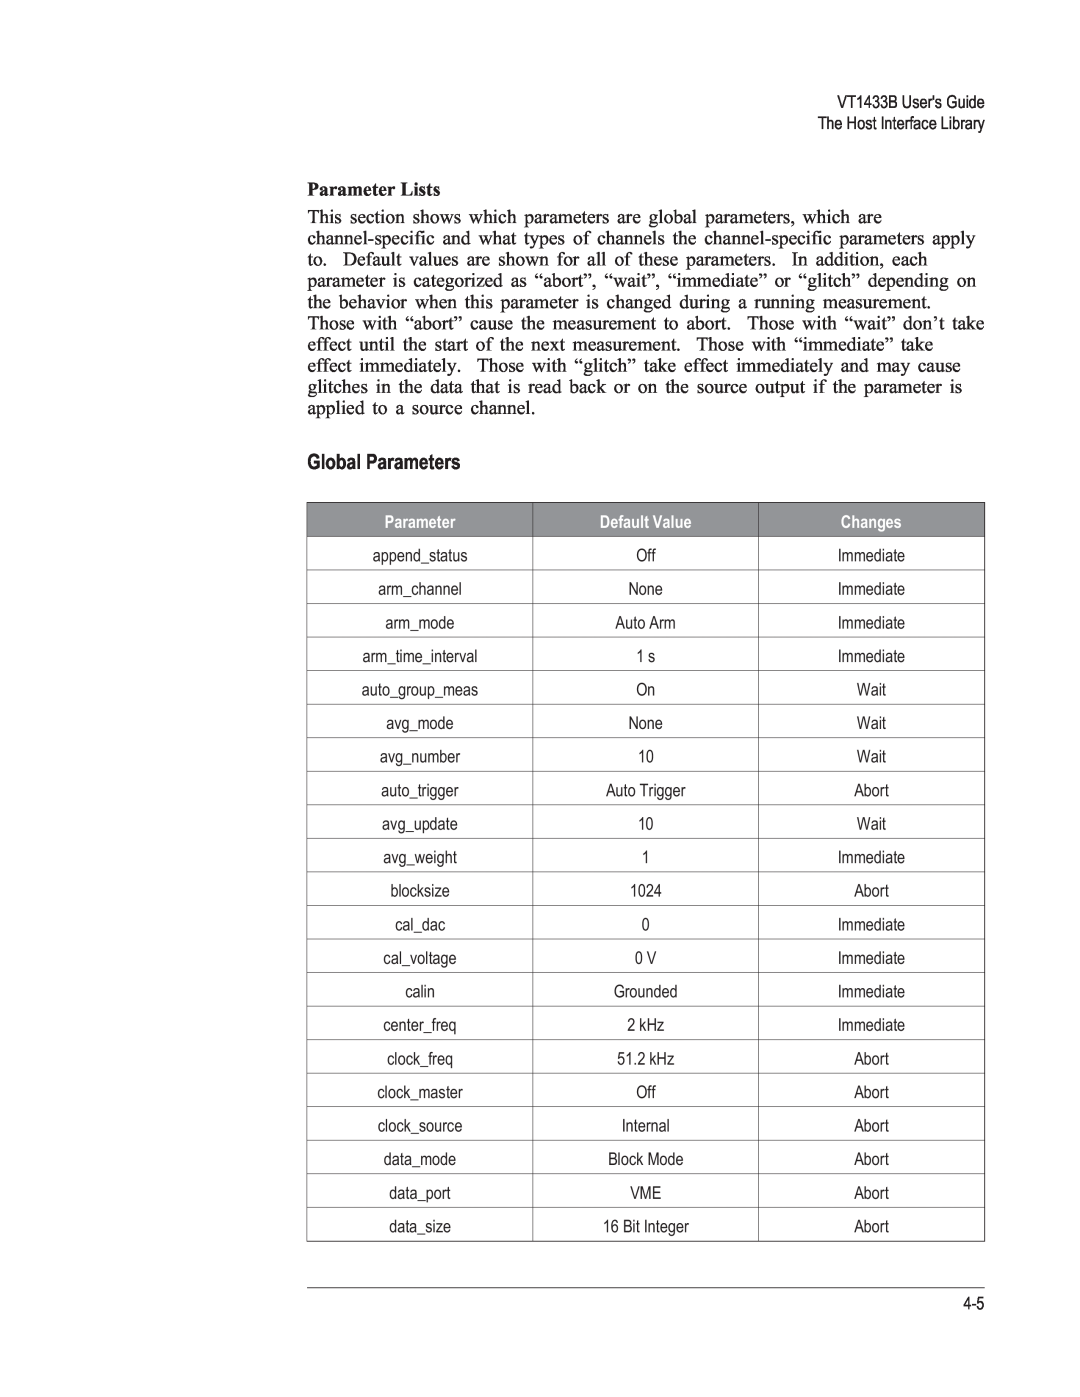 VXI VT1433B manual Global Parameters, Parameter Lists 